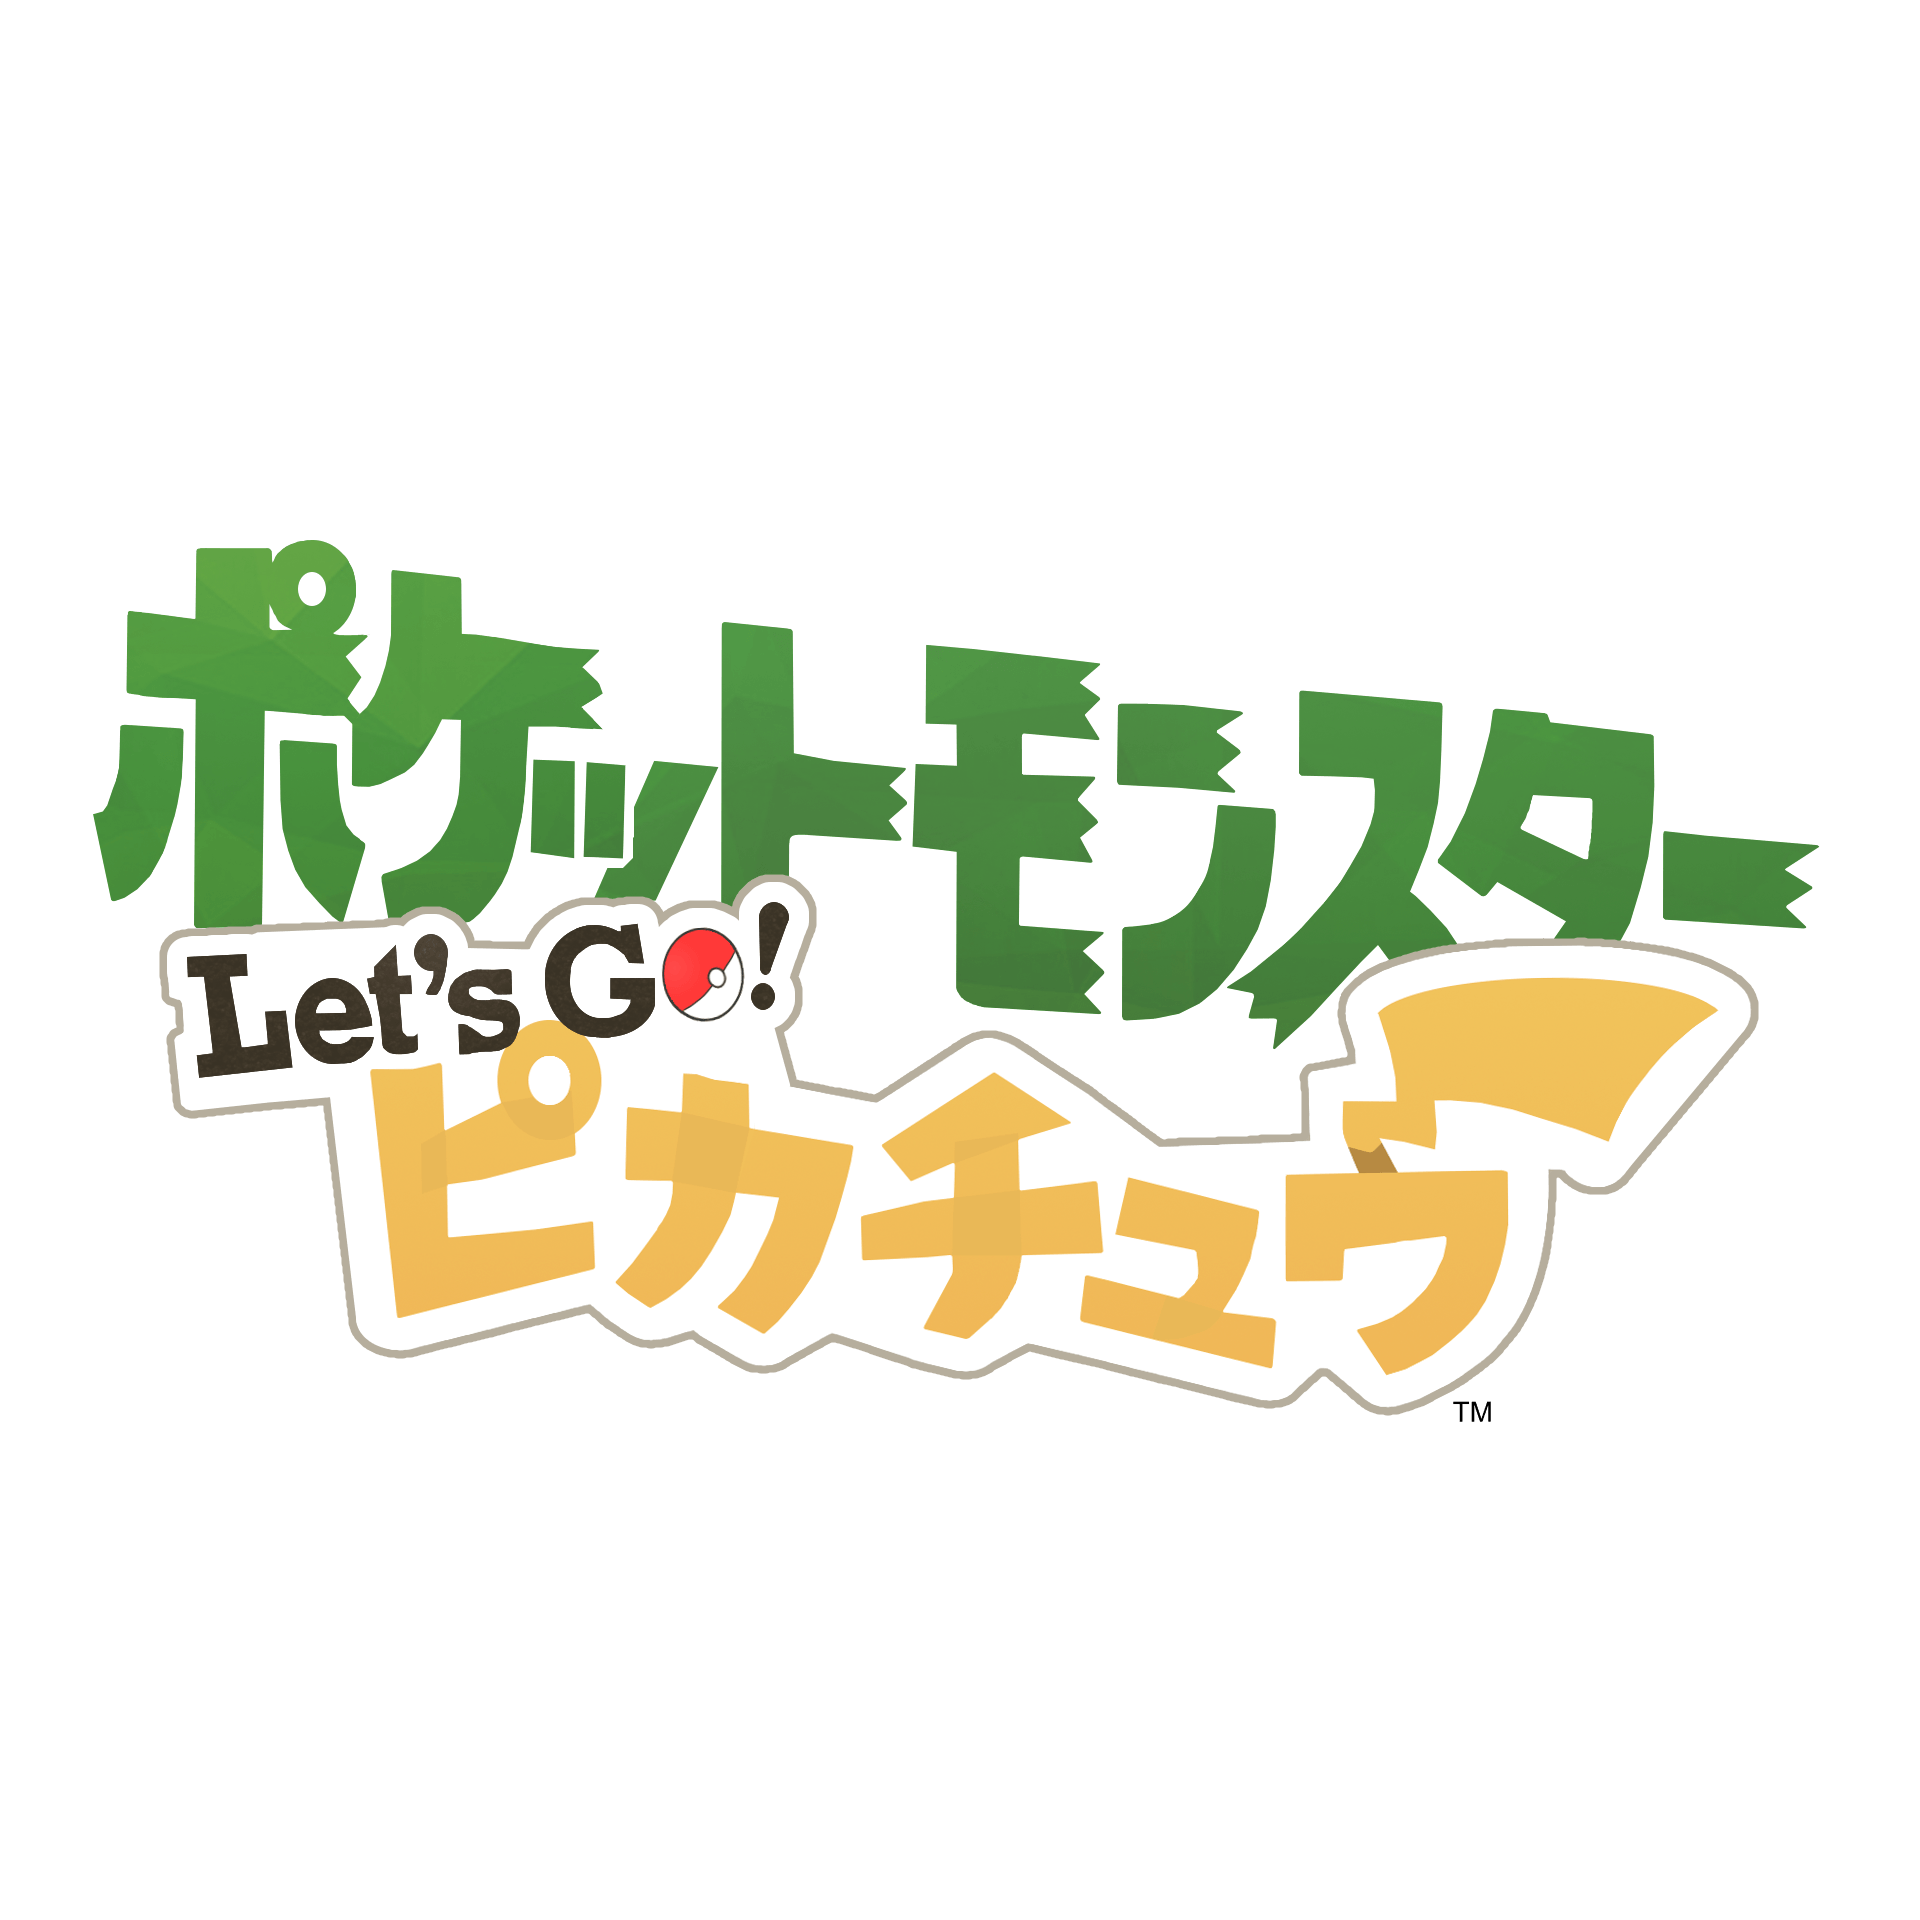 Pokemon Japanese Logo - Higher Resolution of the [Pokémon Let's Go! Pikachu] Logo (Japanese ...